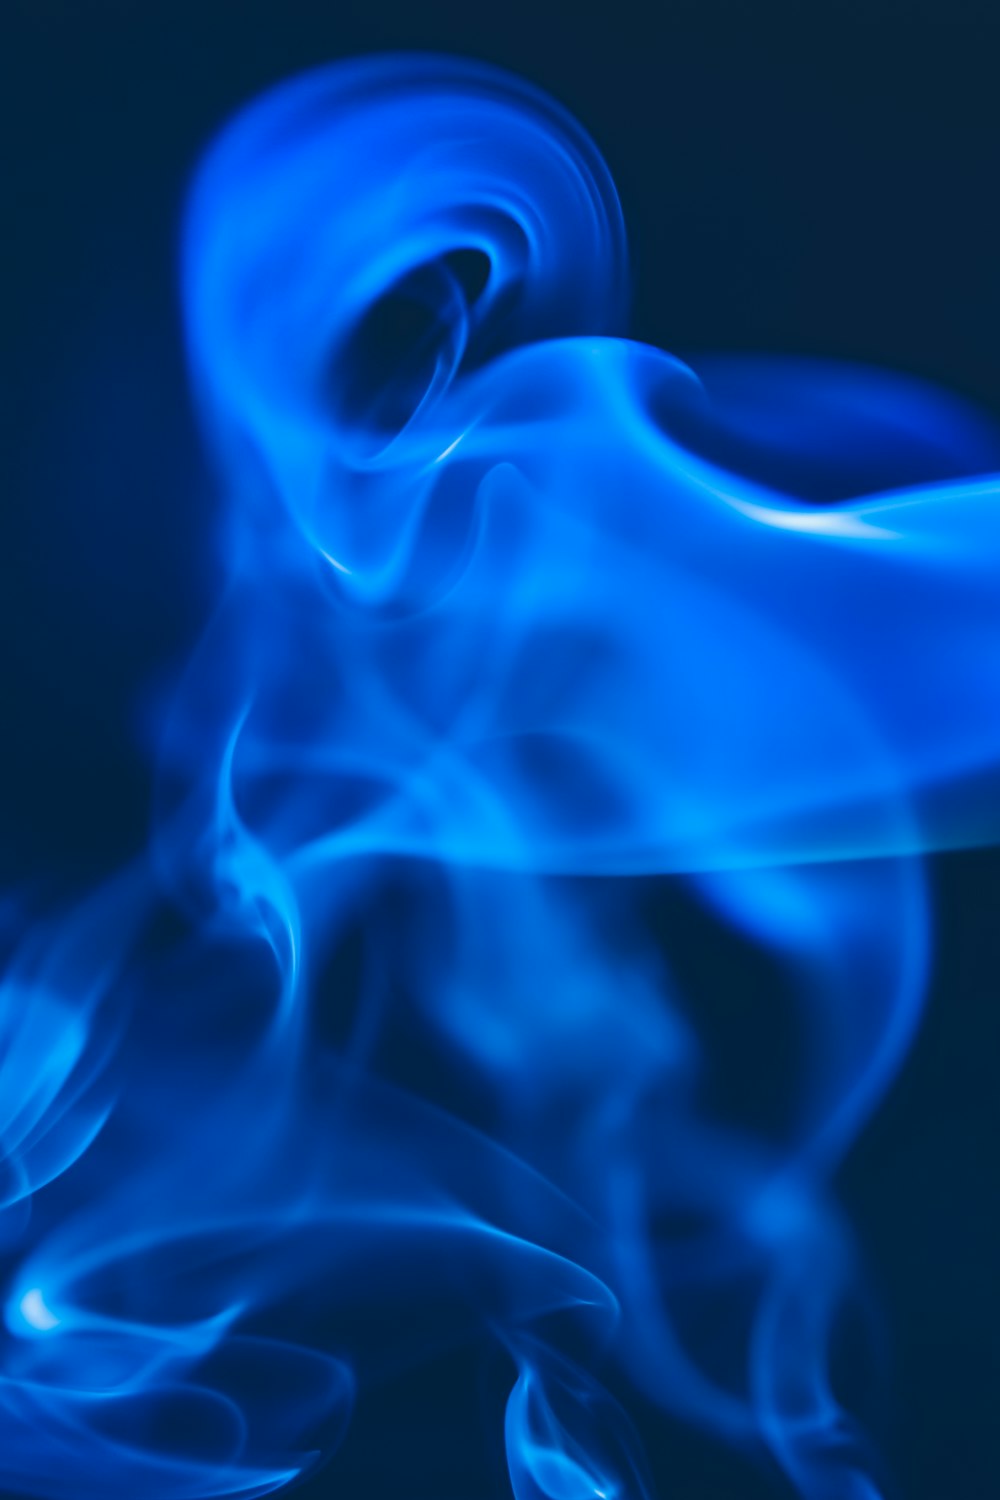 a blue smoke swirls across a black background